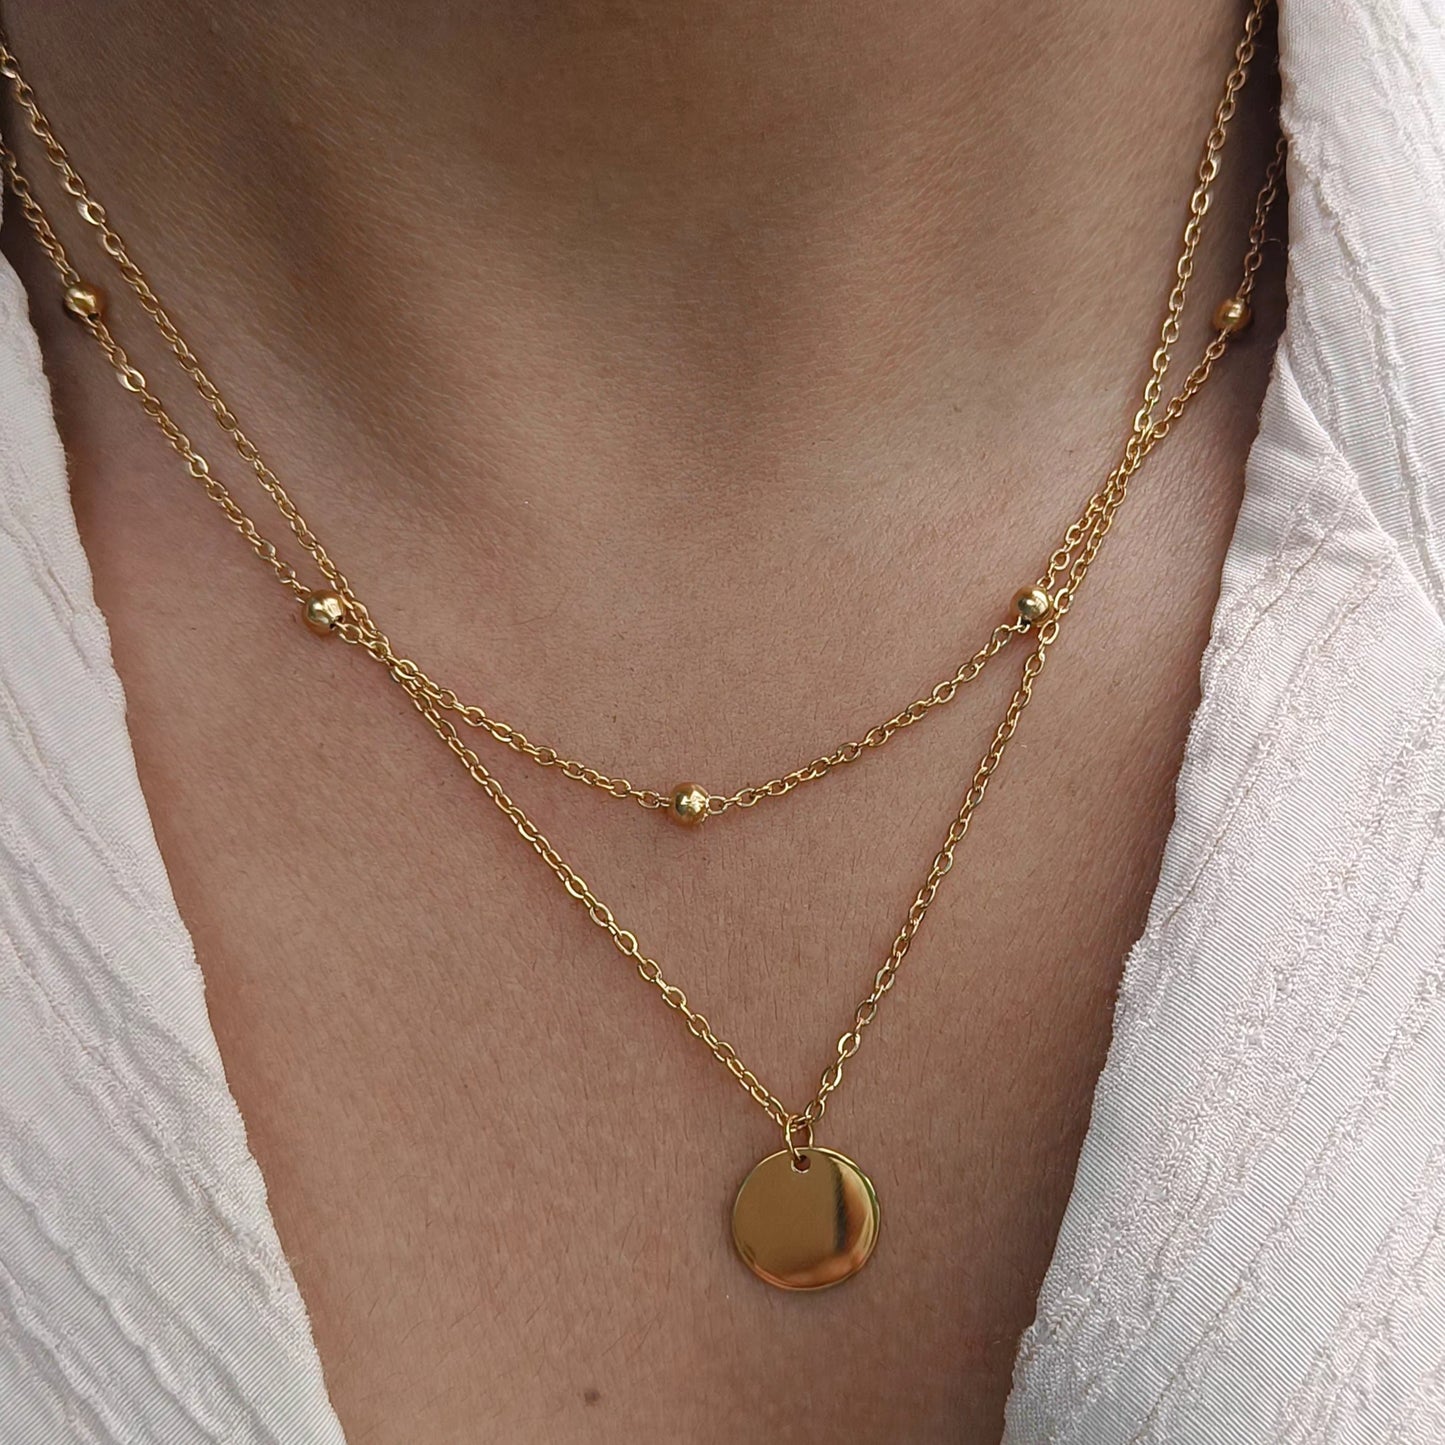 Sierra layered necklace